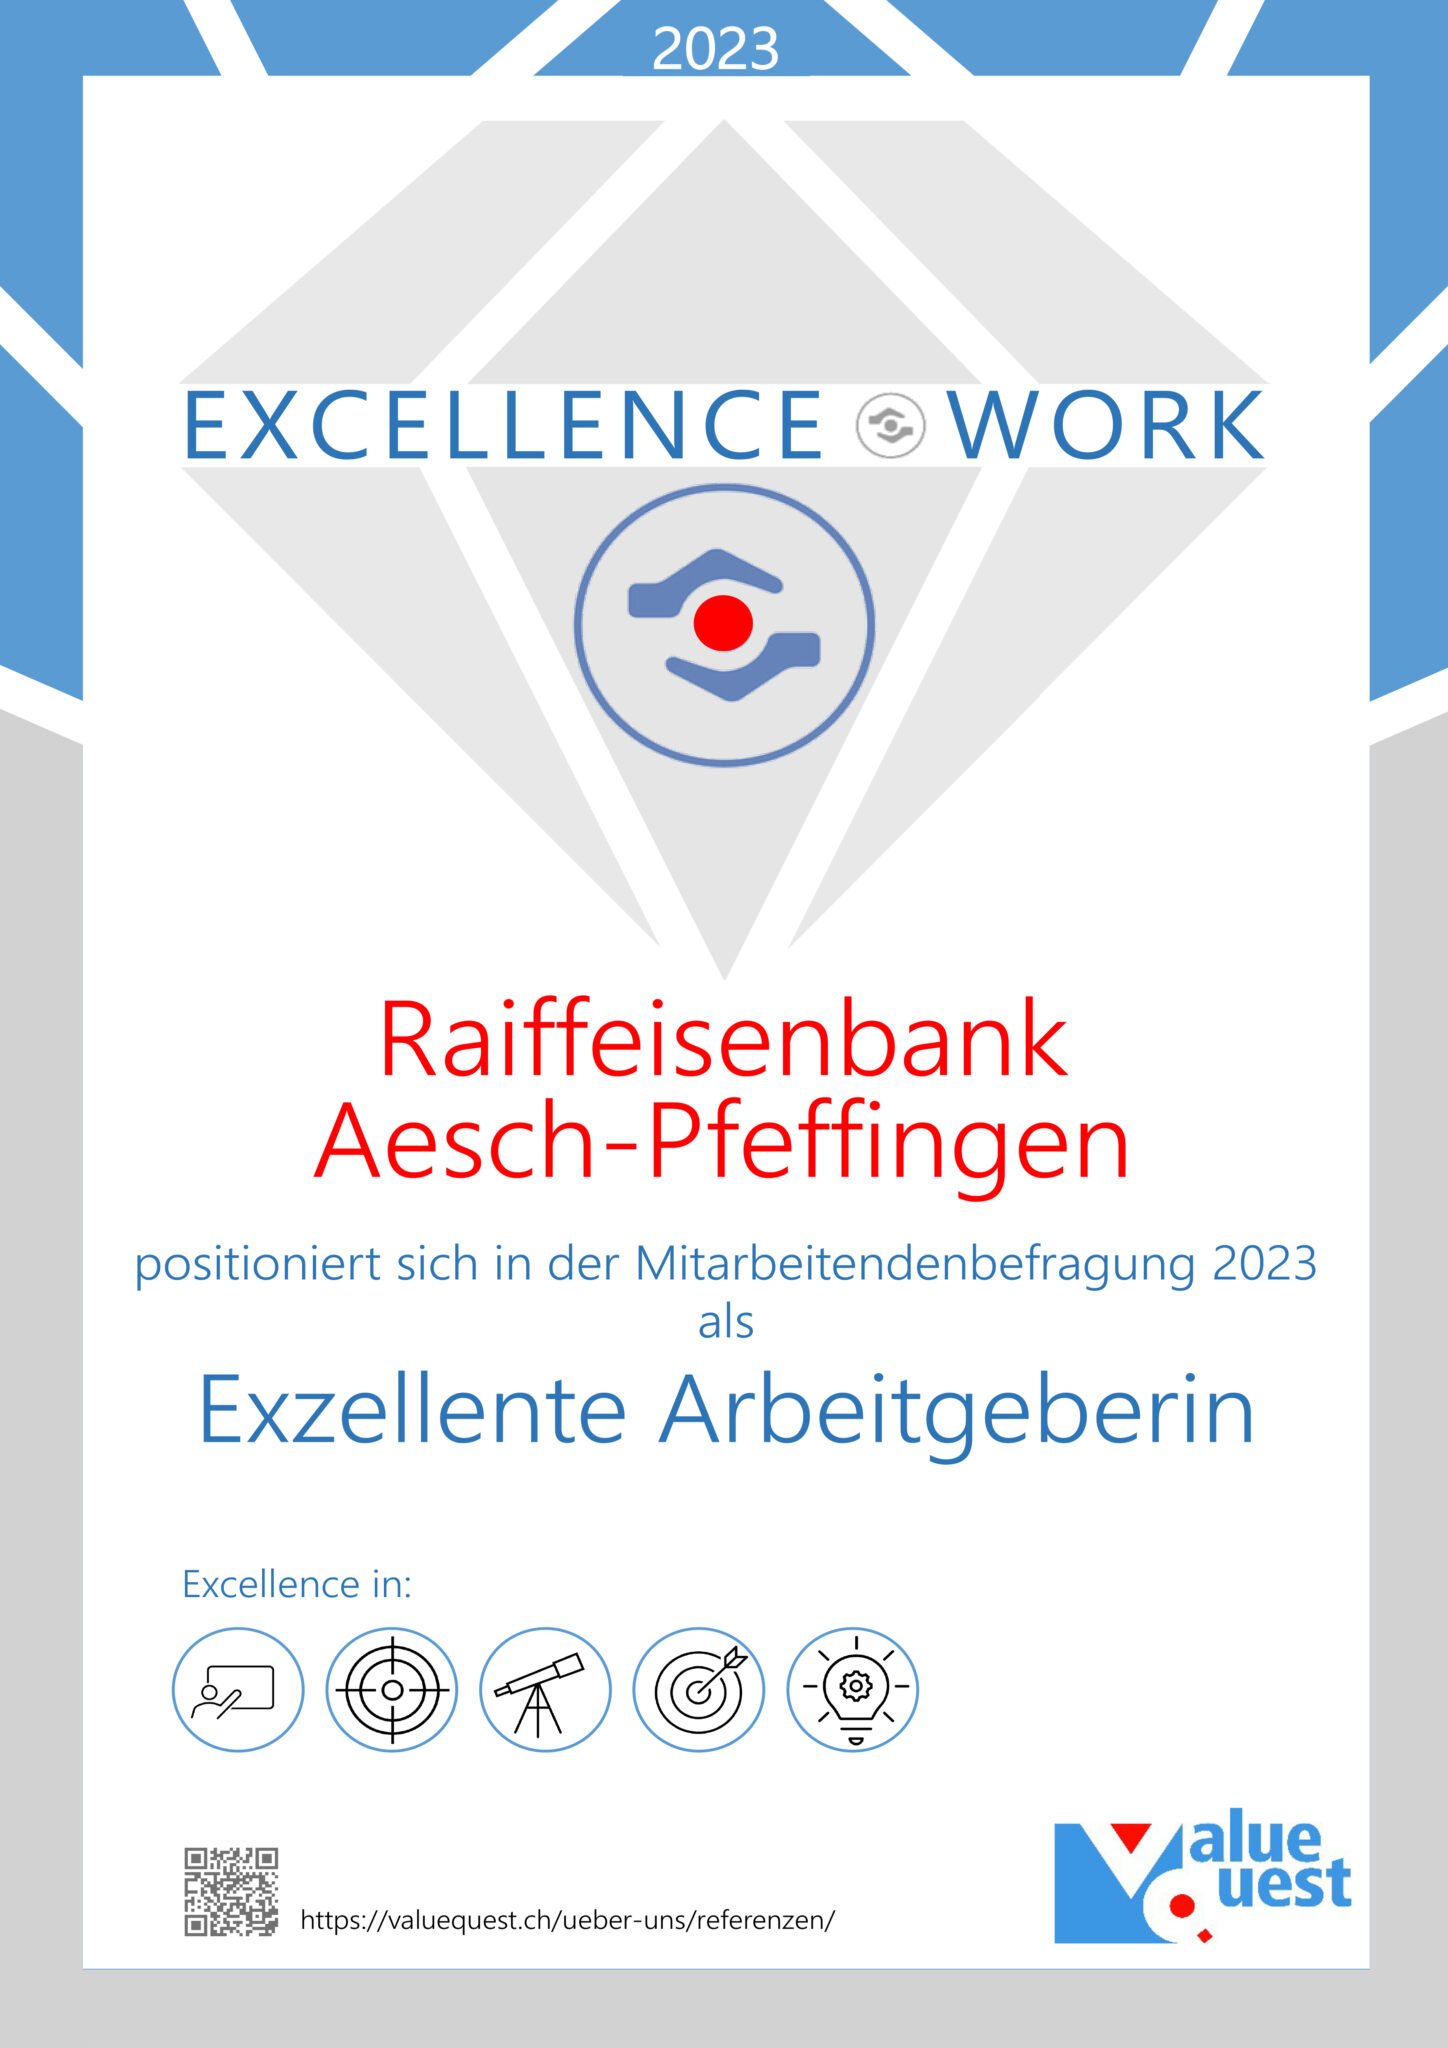 Excellence"Work Raiffeisenbank Aesch-Pfeffingen